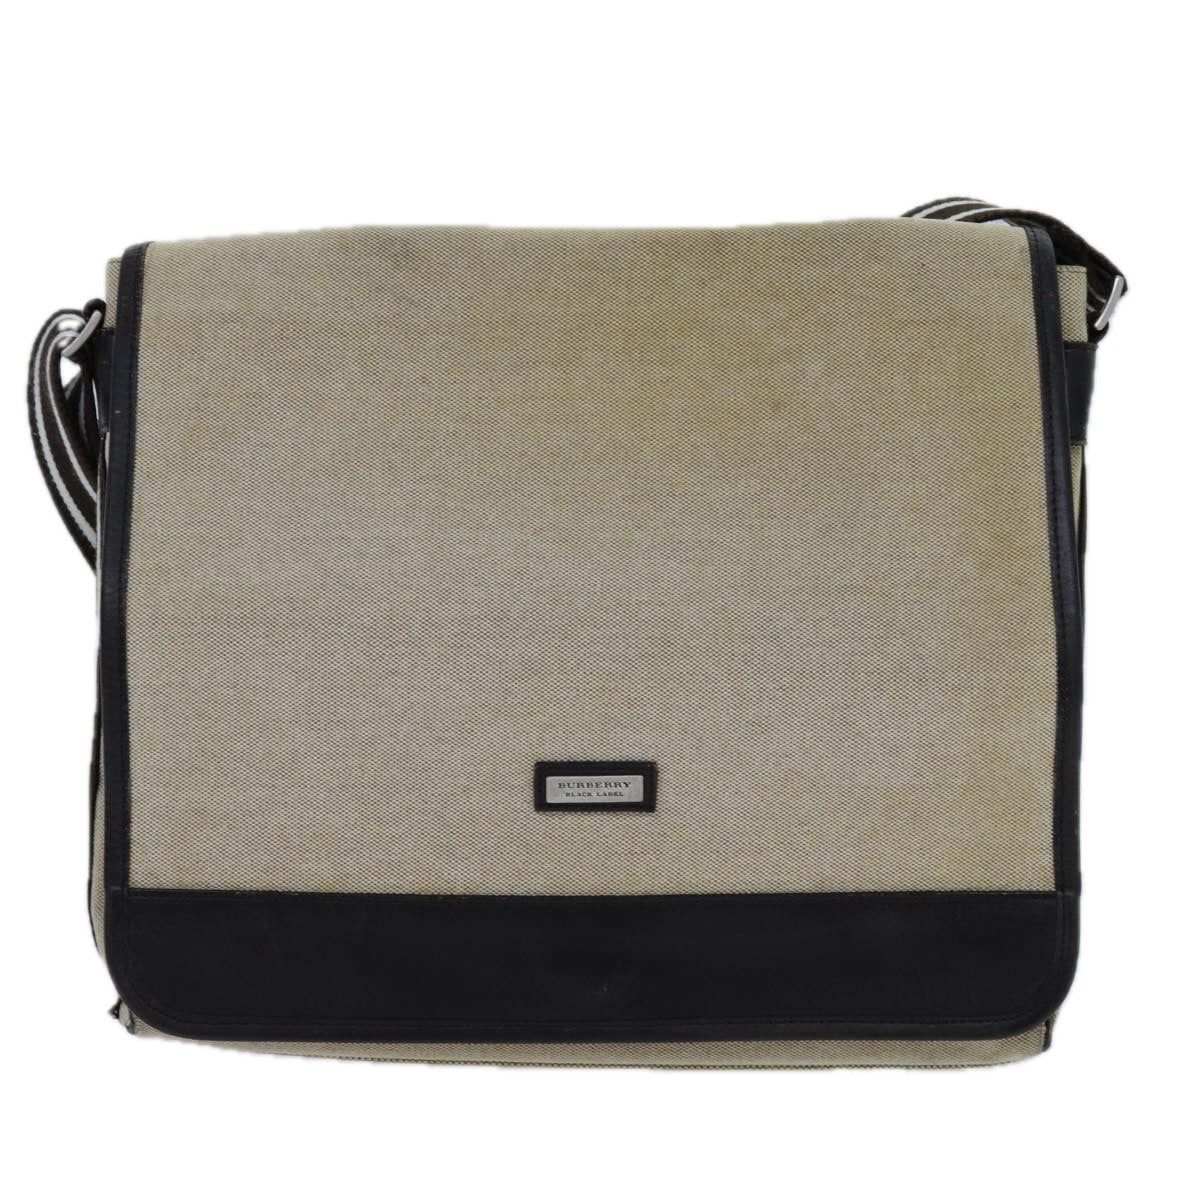 GIVENCHY PRADA Burberry Shoulder Bag Nylon Leather 3Set Black Beige Auth bs13505 - 0